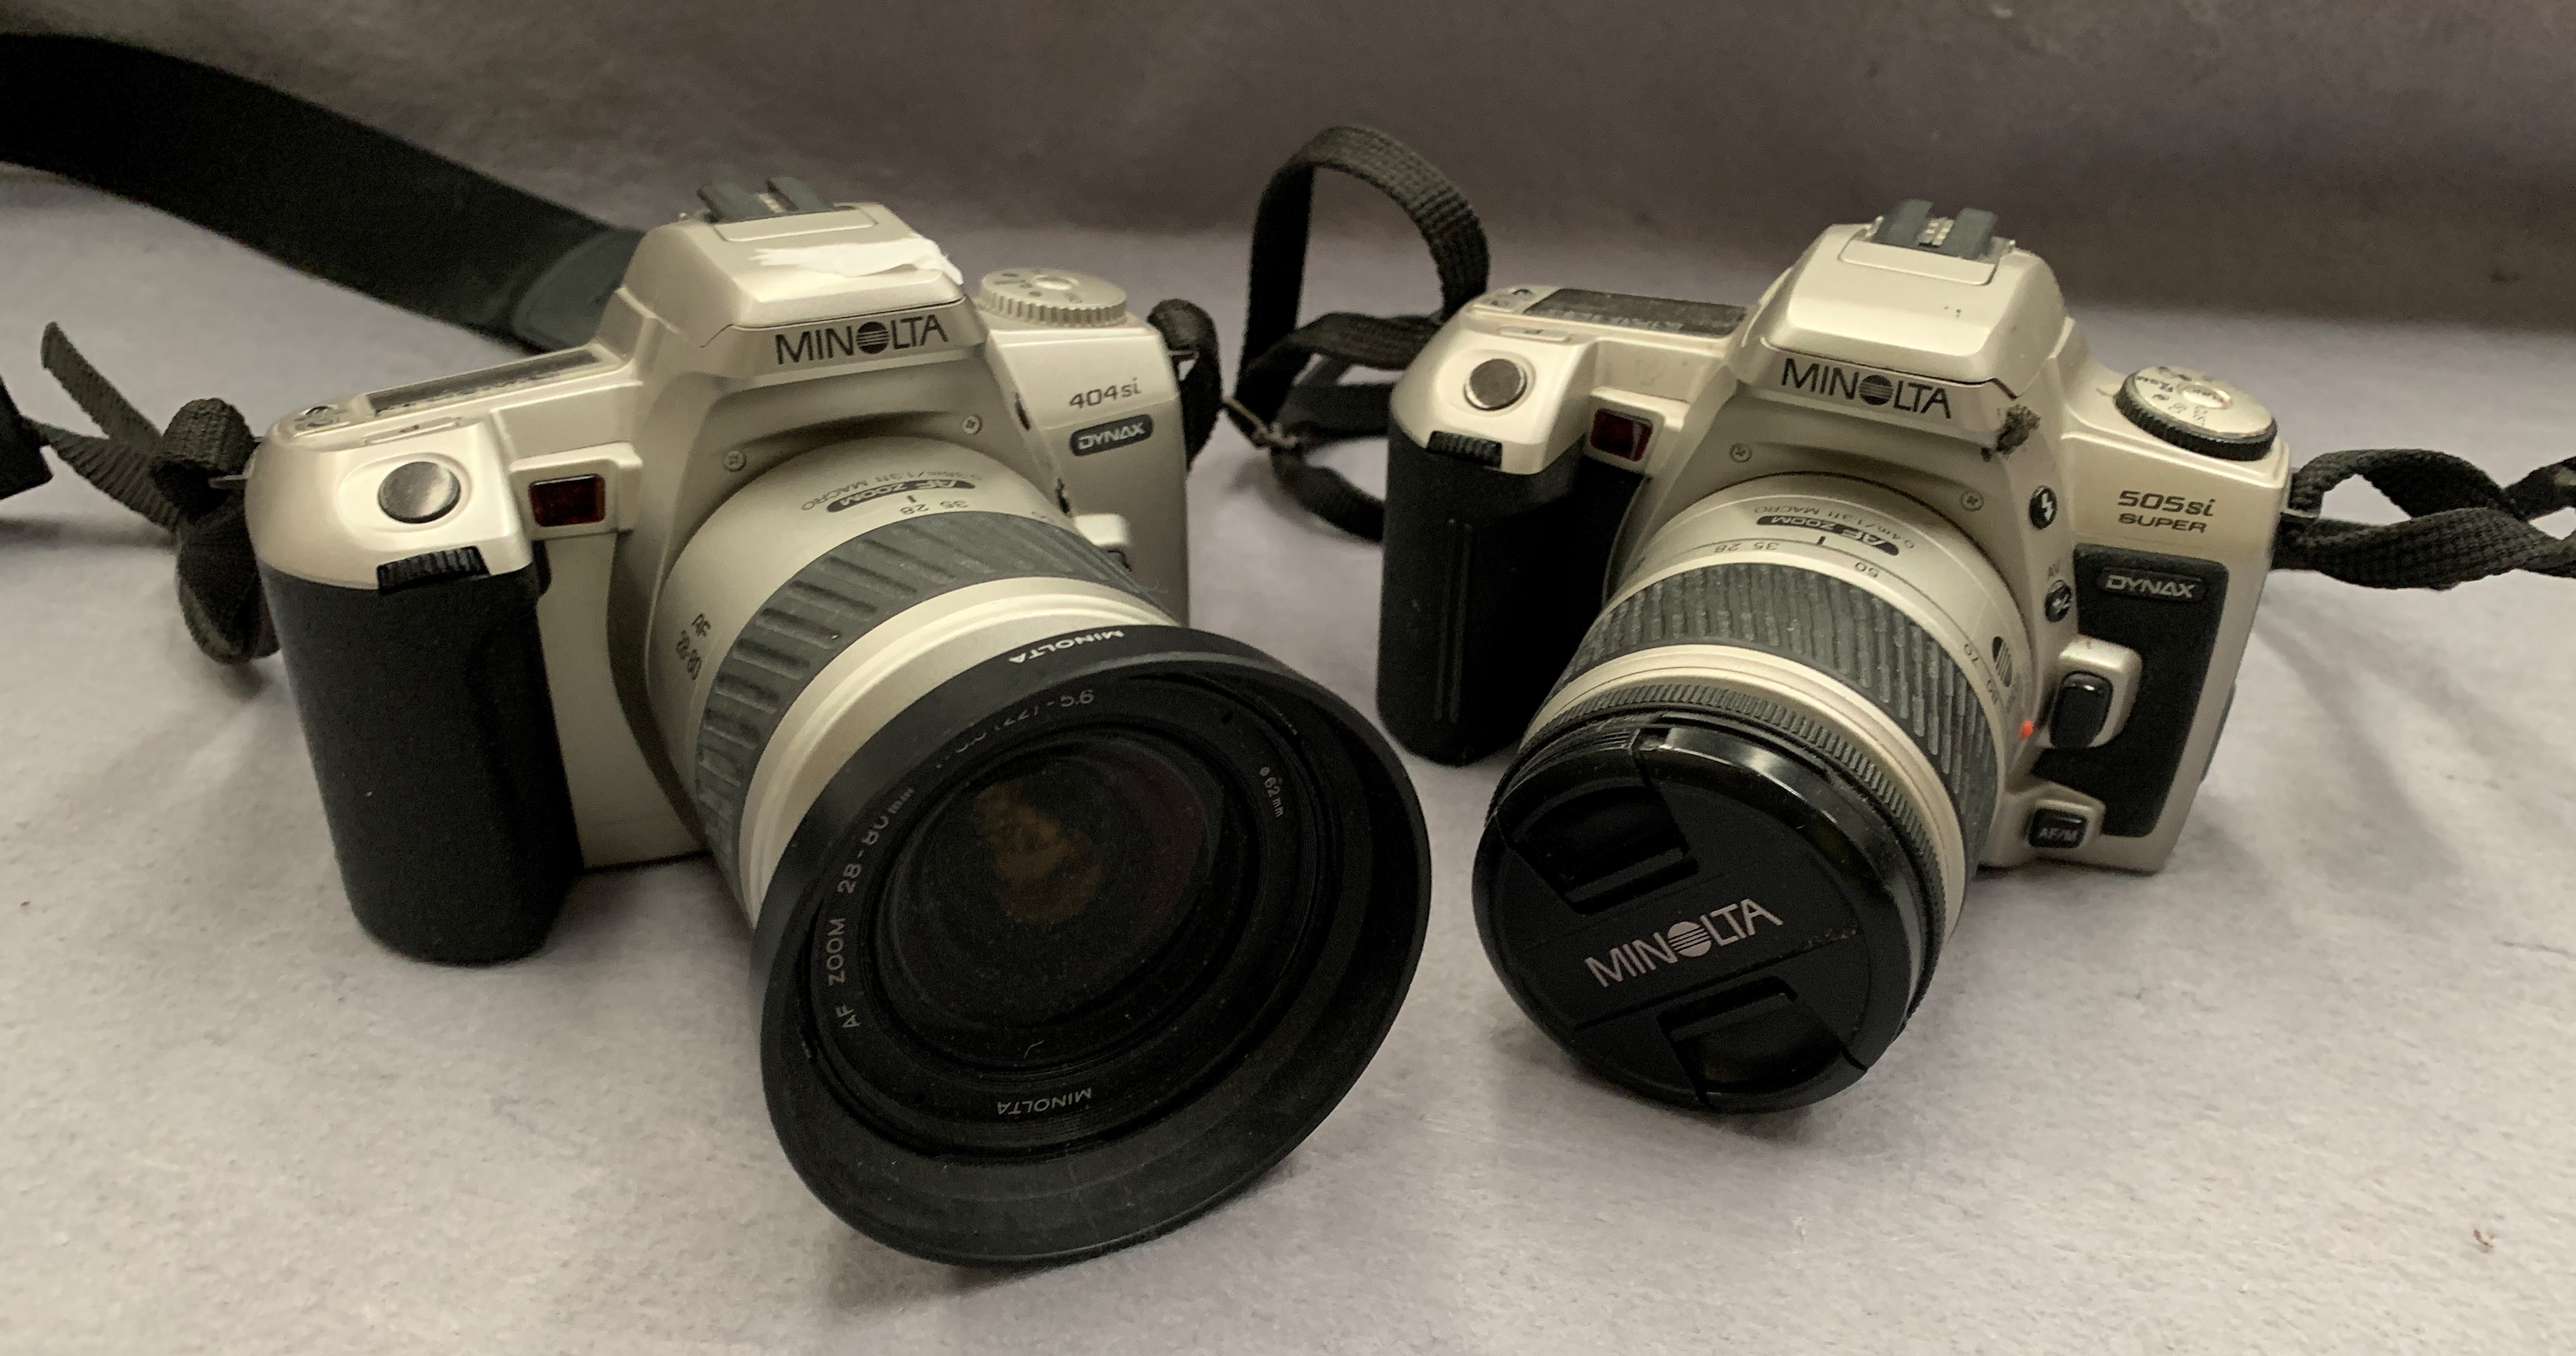 A Minolta 404Si camera fitted with a Minolta AF Zoom 28-80mm lens and a Minolta 505Si camera fitted